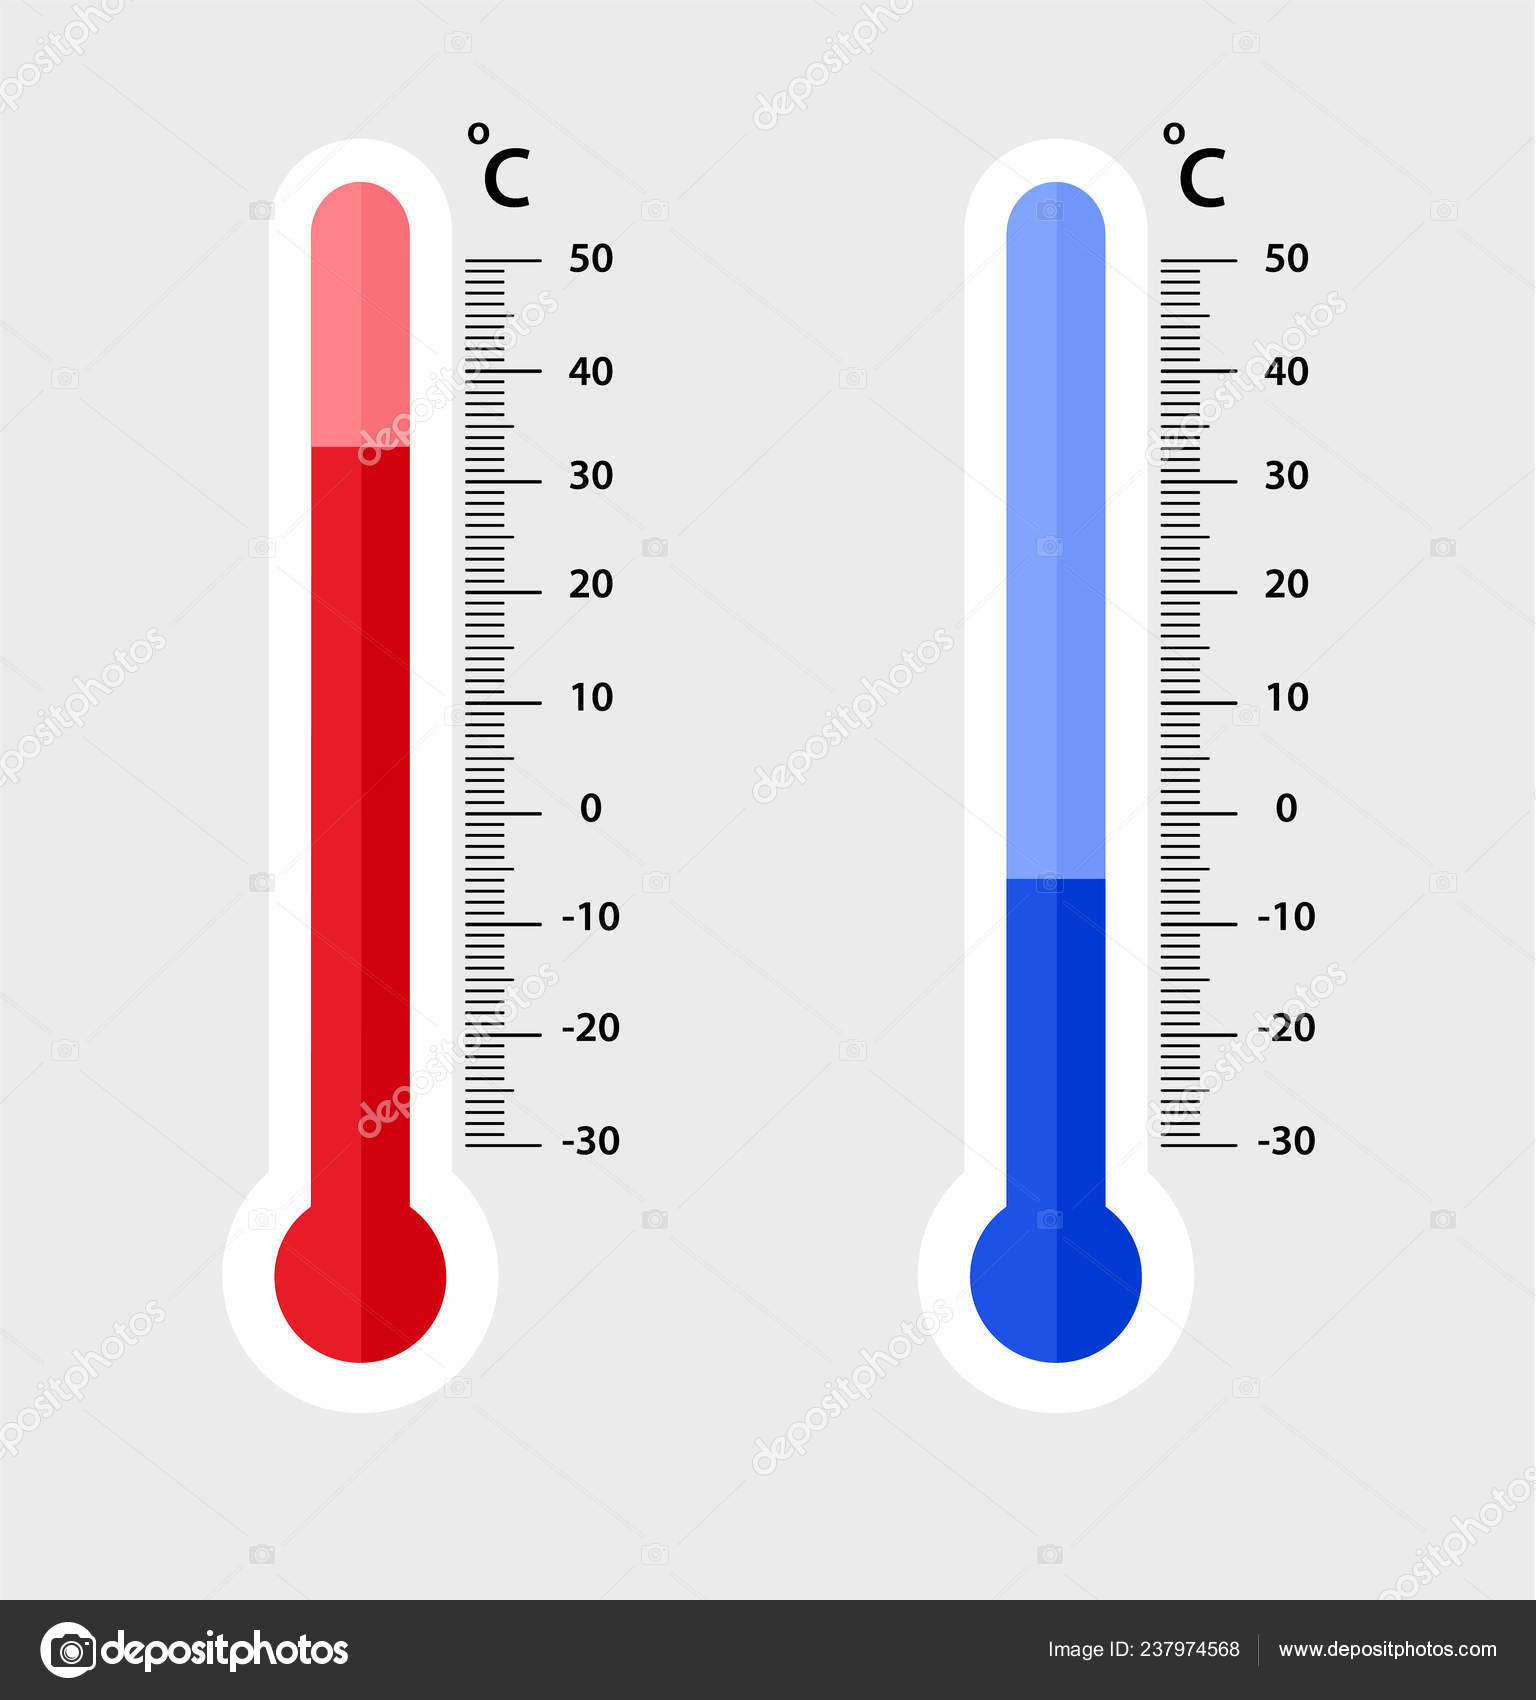 https://st4.depositphotos.com/6230340/23797/v/1600/depositphotos_237974568-stock-illustration-celsius-meteorology-thermometers-measuring-heat.jpg